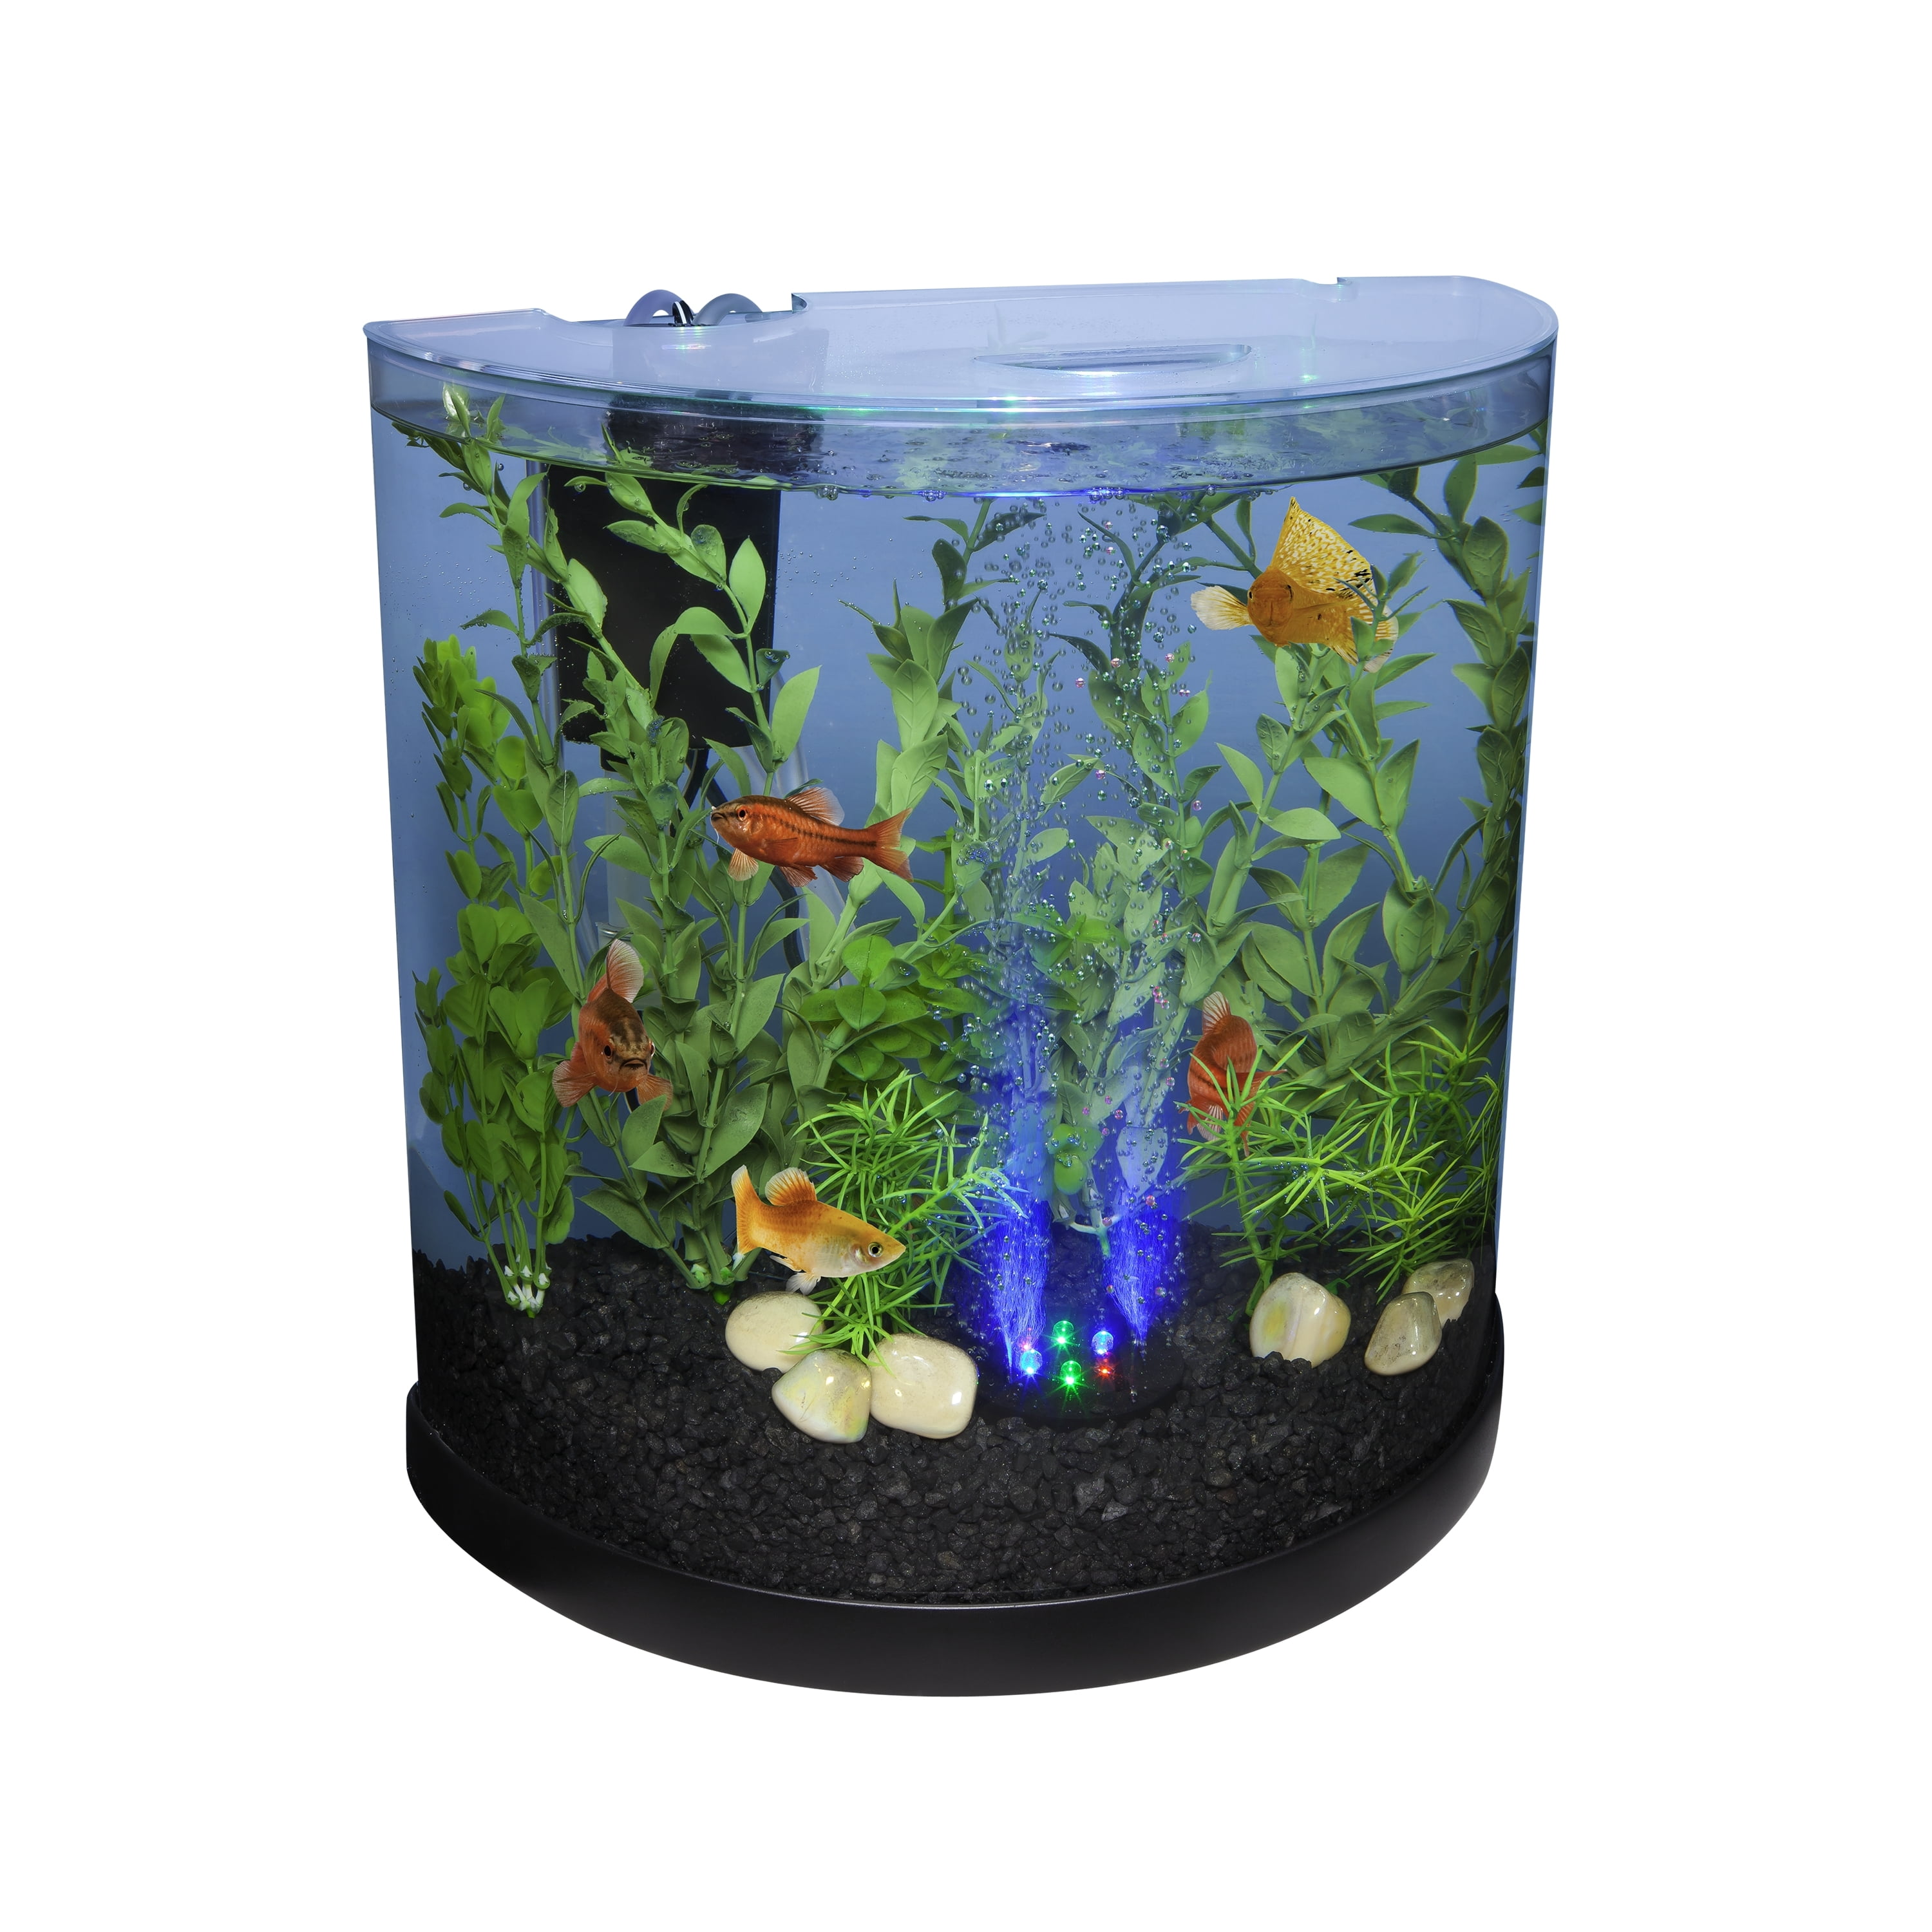 Tetra Bubbling LED Kit 3 Gallons, Half-Moon Fish Aquarium